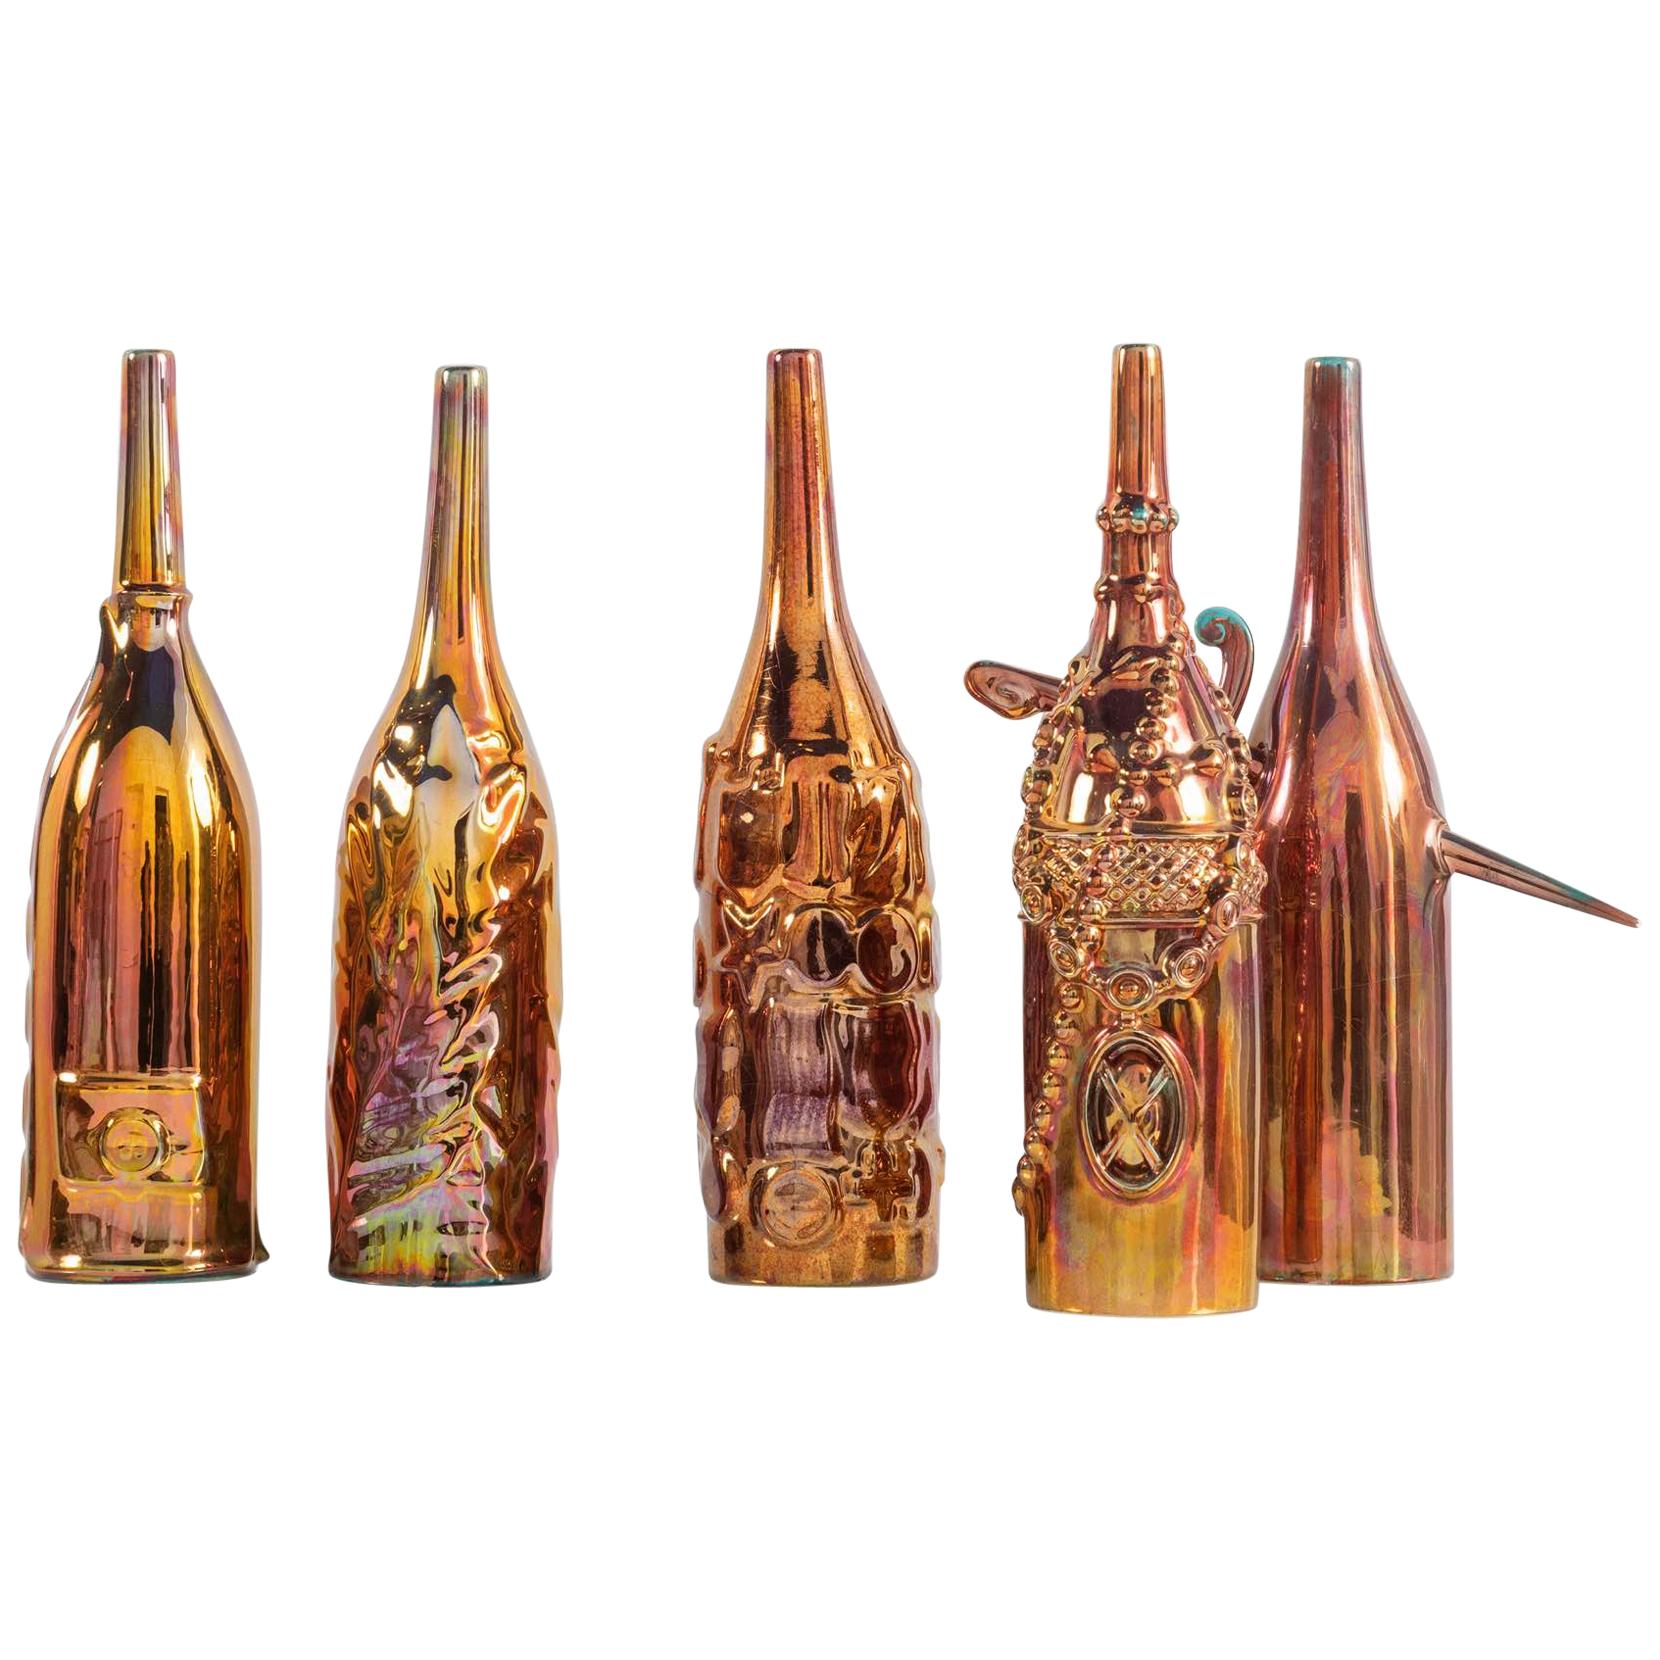 Gio Ponti Le Bottiglie Abitate Complete Series of Five Ceramic Bottles,  1950 at 1stDibs